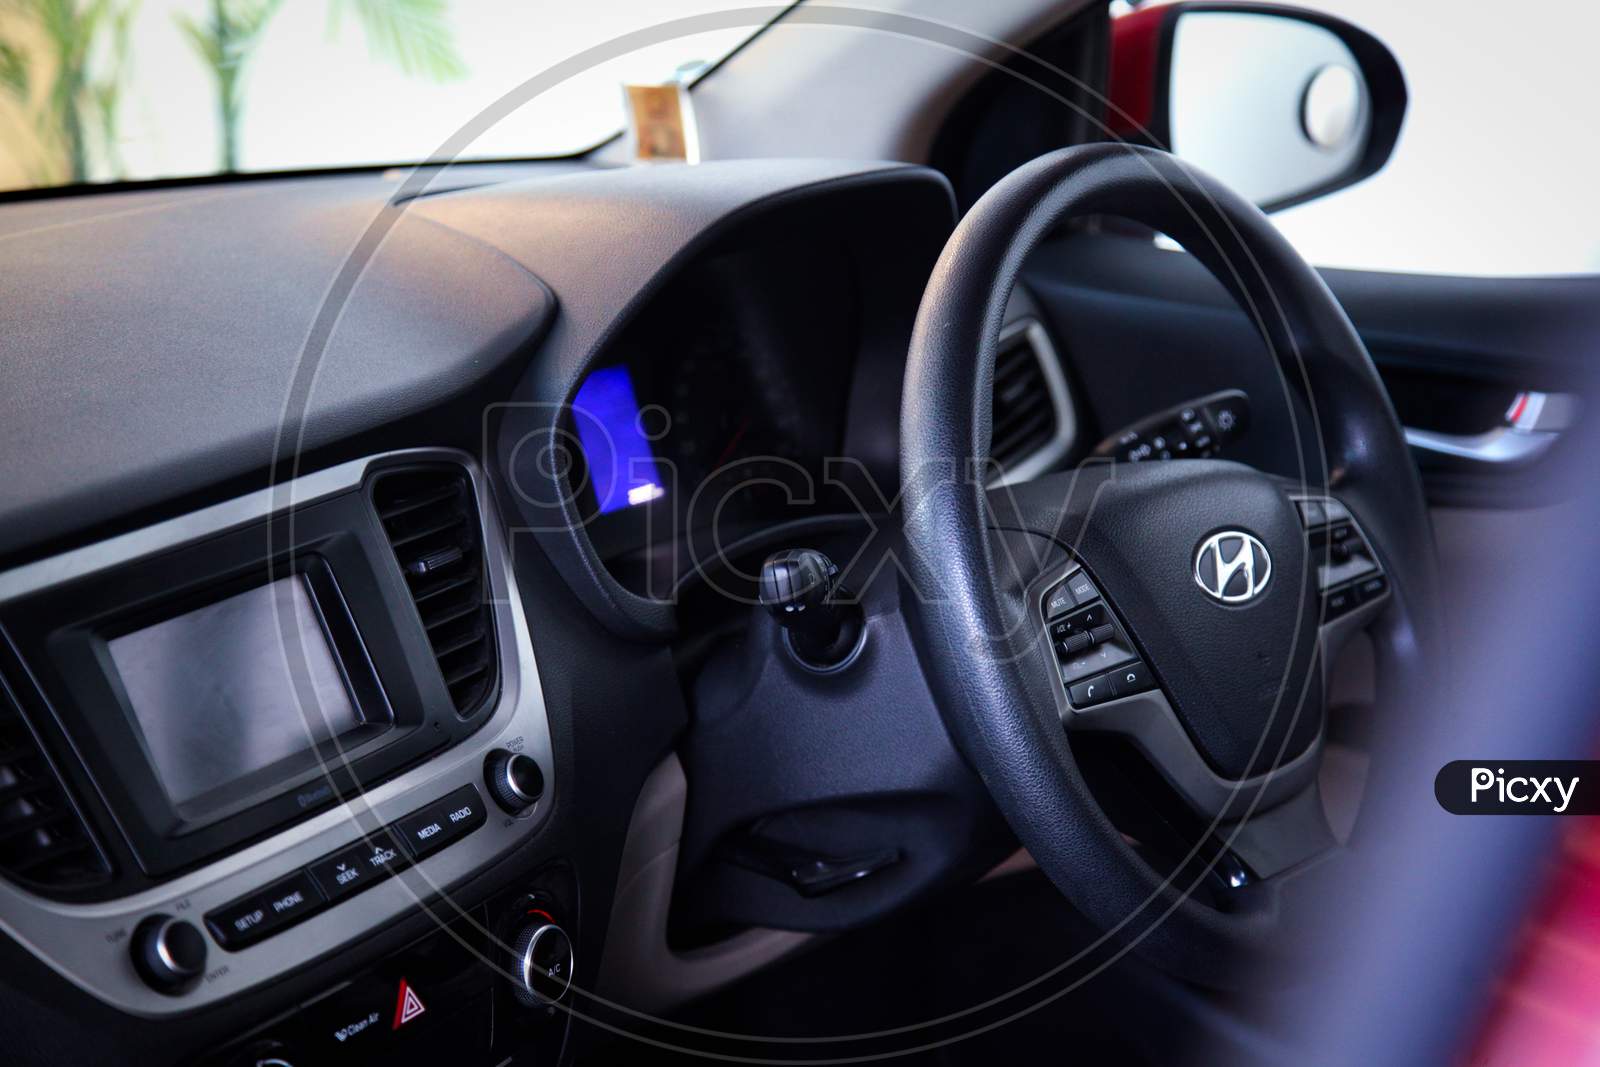 Hyundai Verna interior from close-up